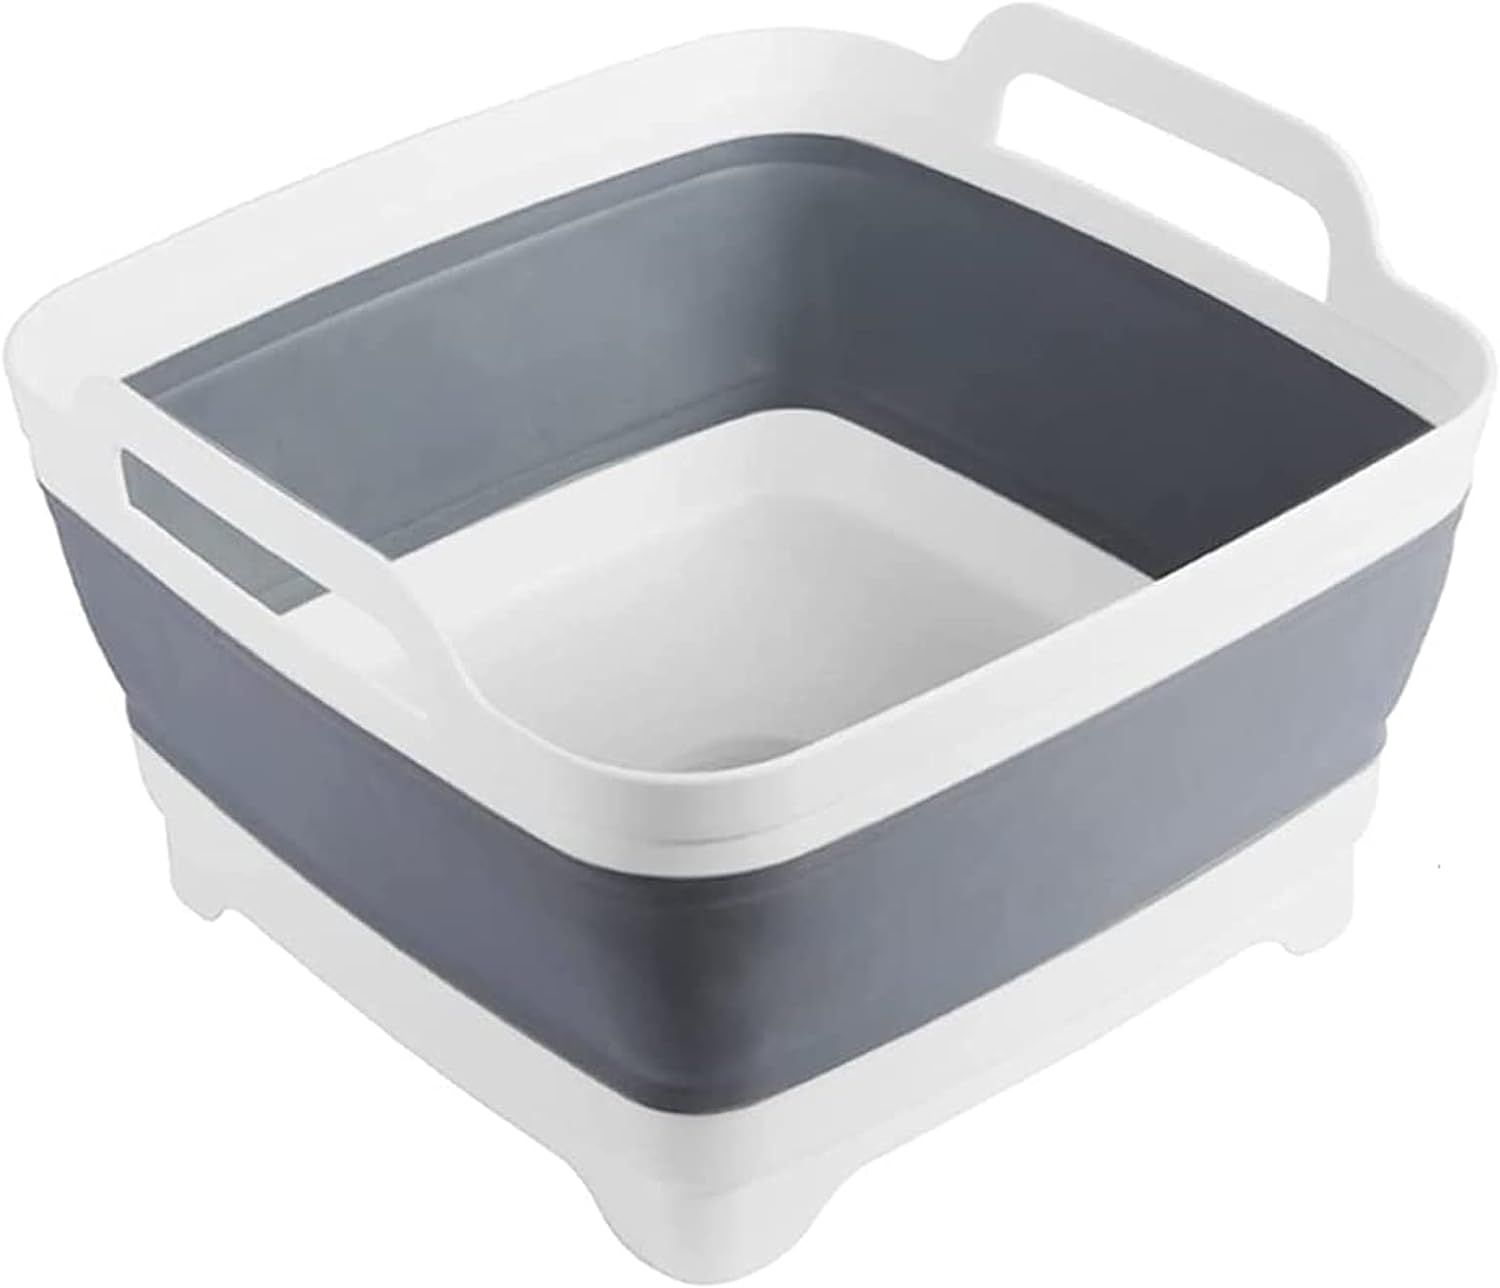 Dishpan for Washing Dishes,9L Collapsible Dish Tub Portable Sink,Wash Dish Basin,Foldable Laundry... | Amazon (US)